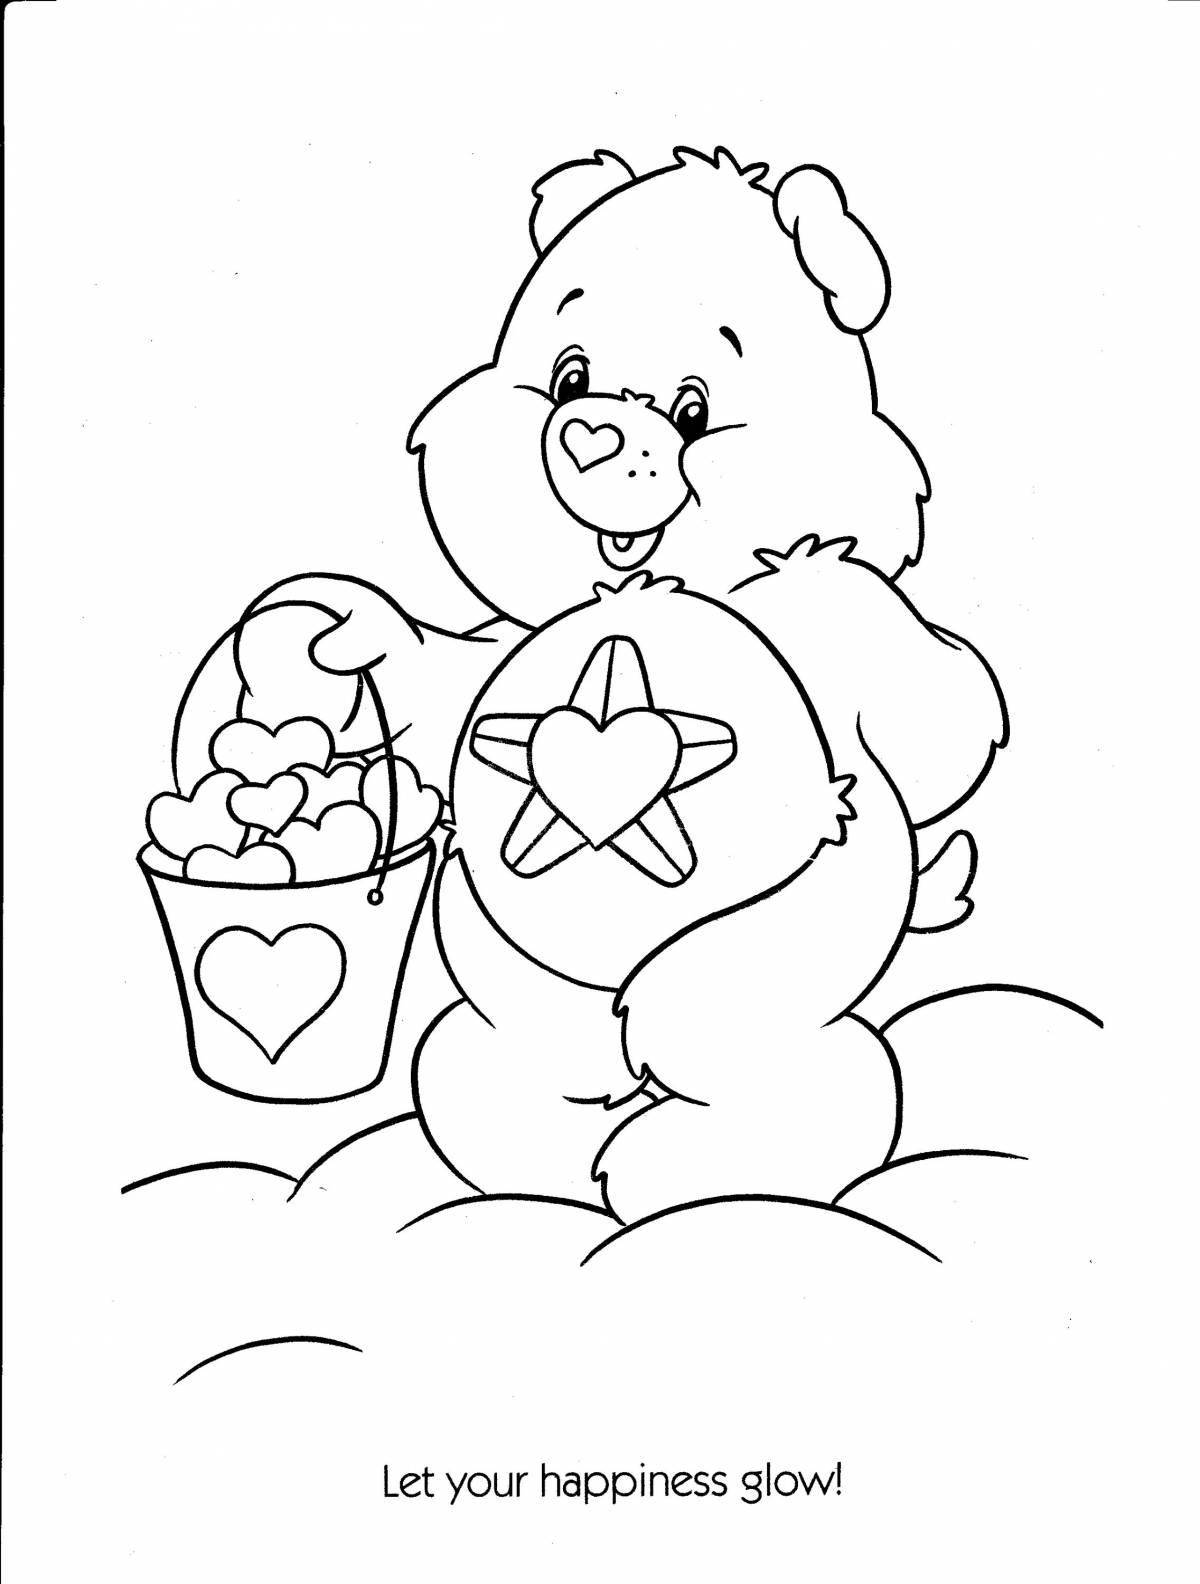 Coloring book bright cute teddy bear